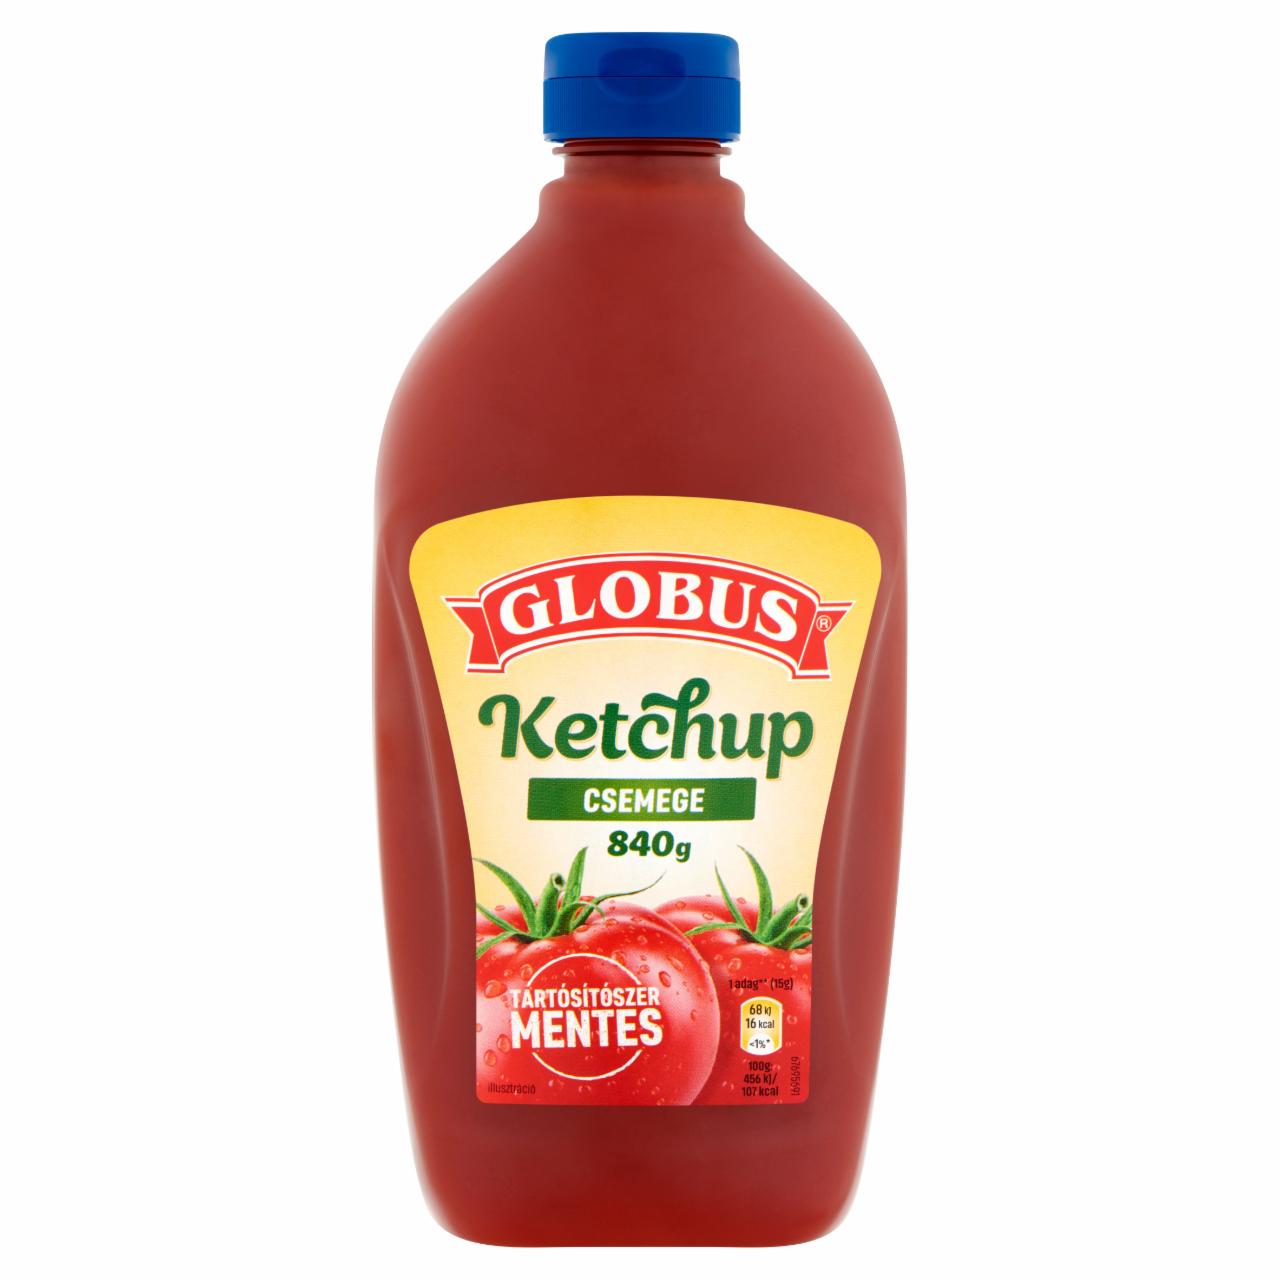 Képek - Globus ketchup 840 g